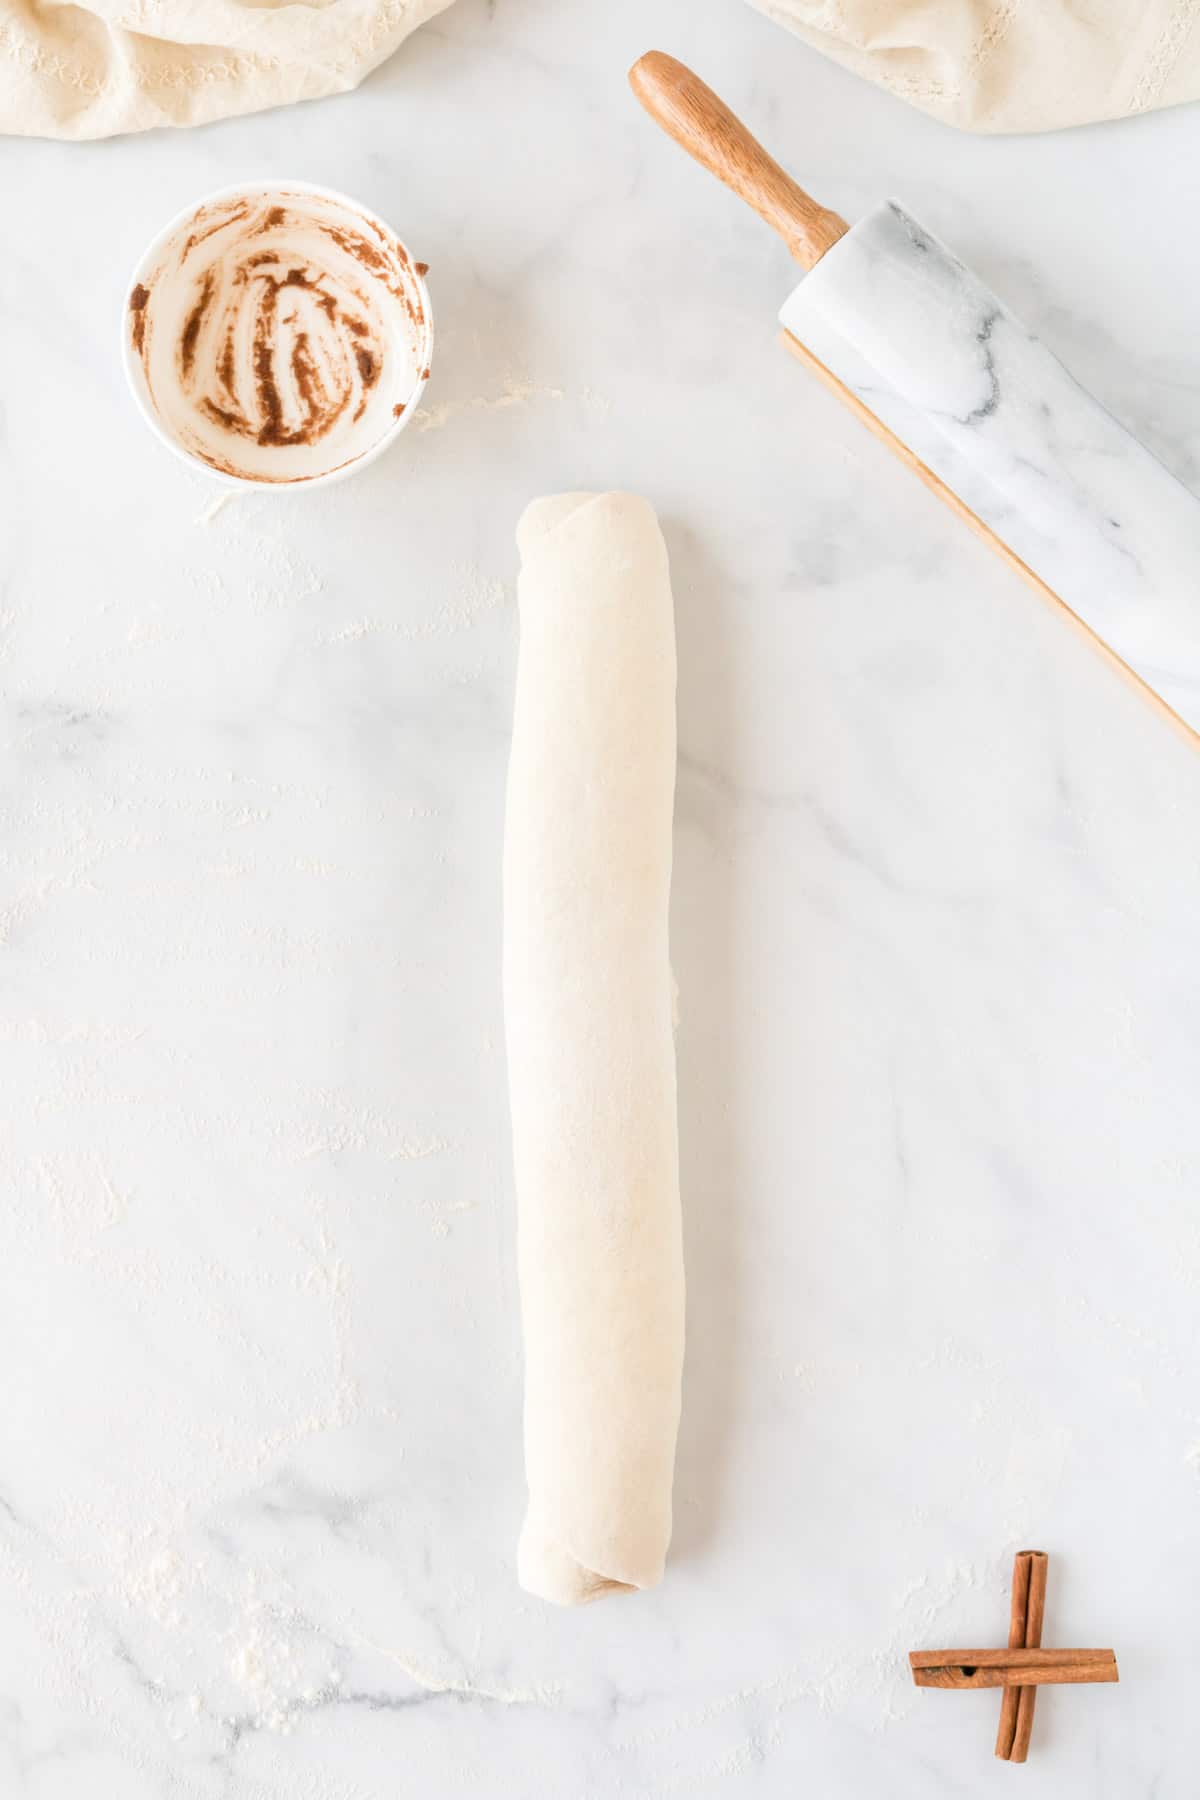 cinnamon roll dough rolled into a log shape